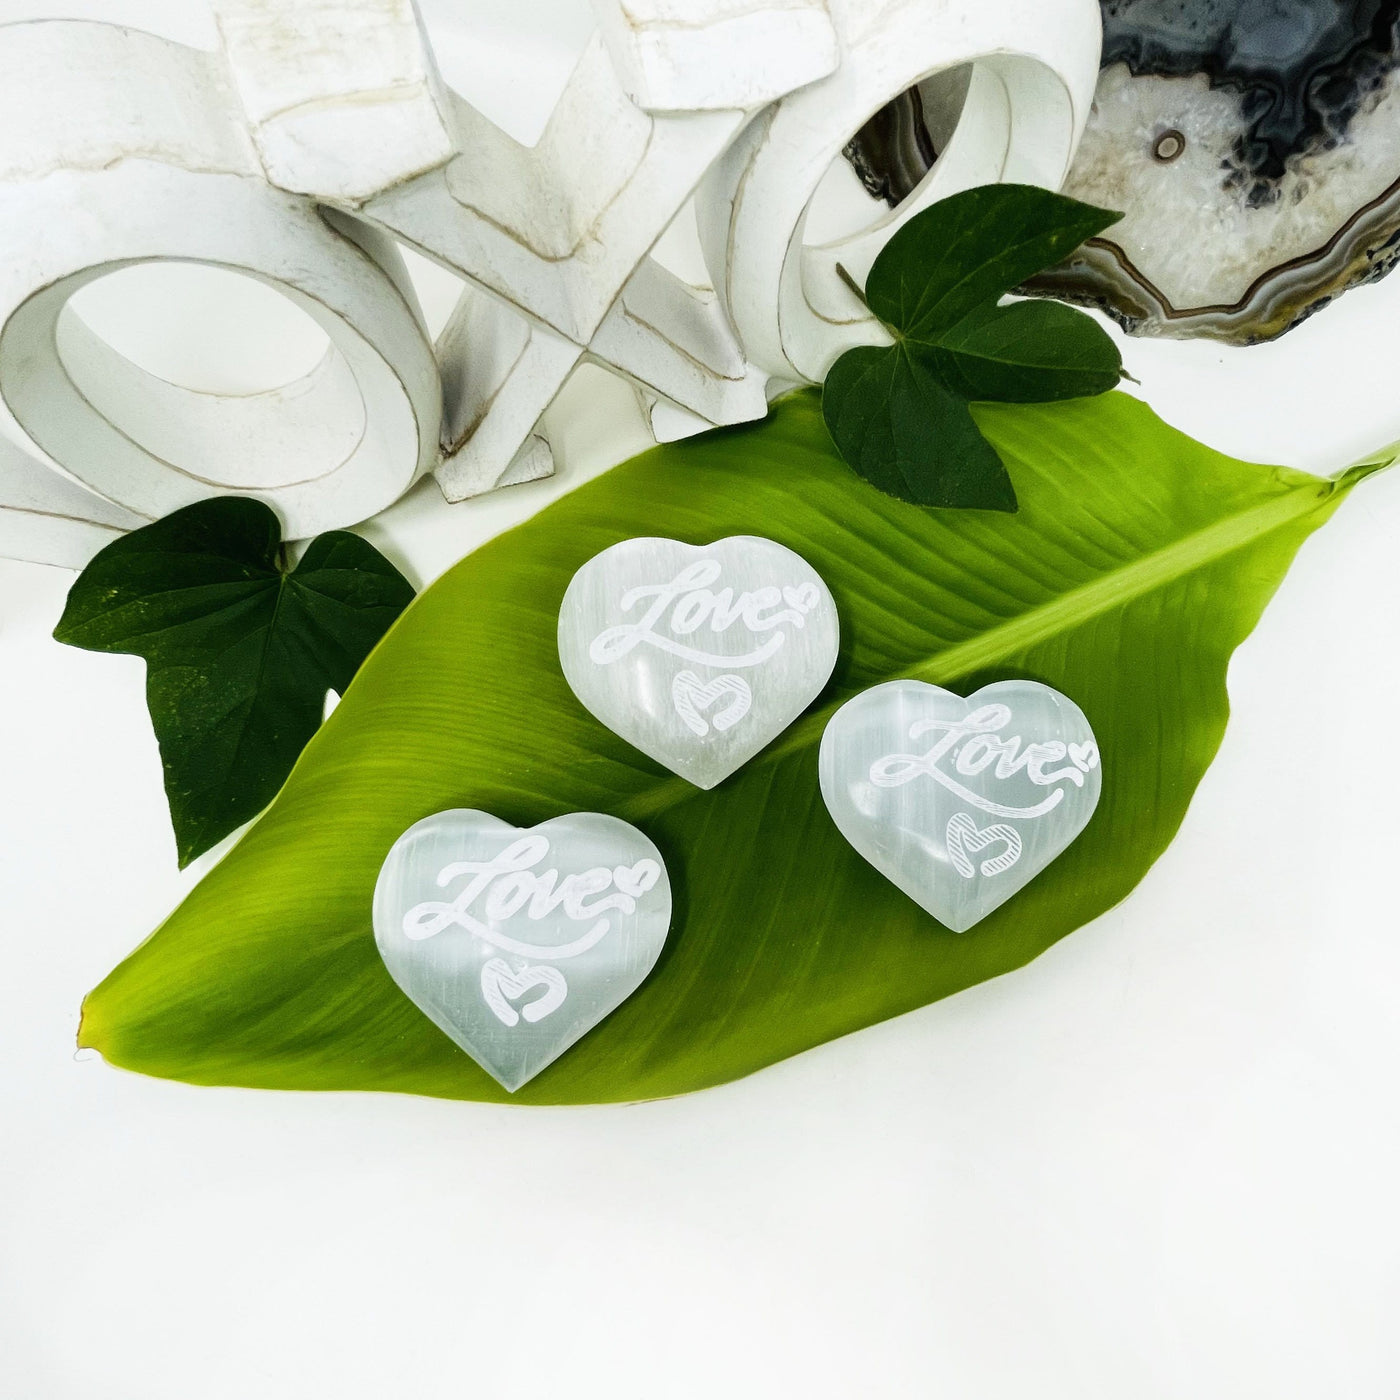 selenite engraved "love" heart stones on display